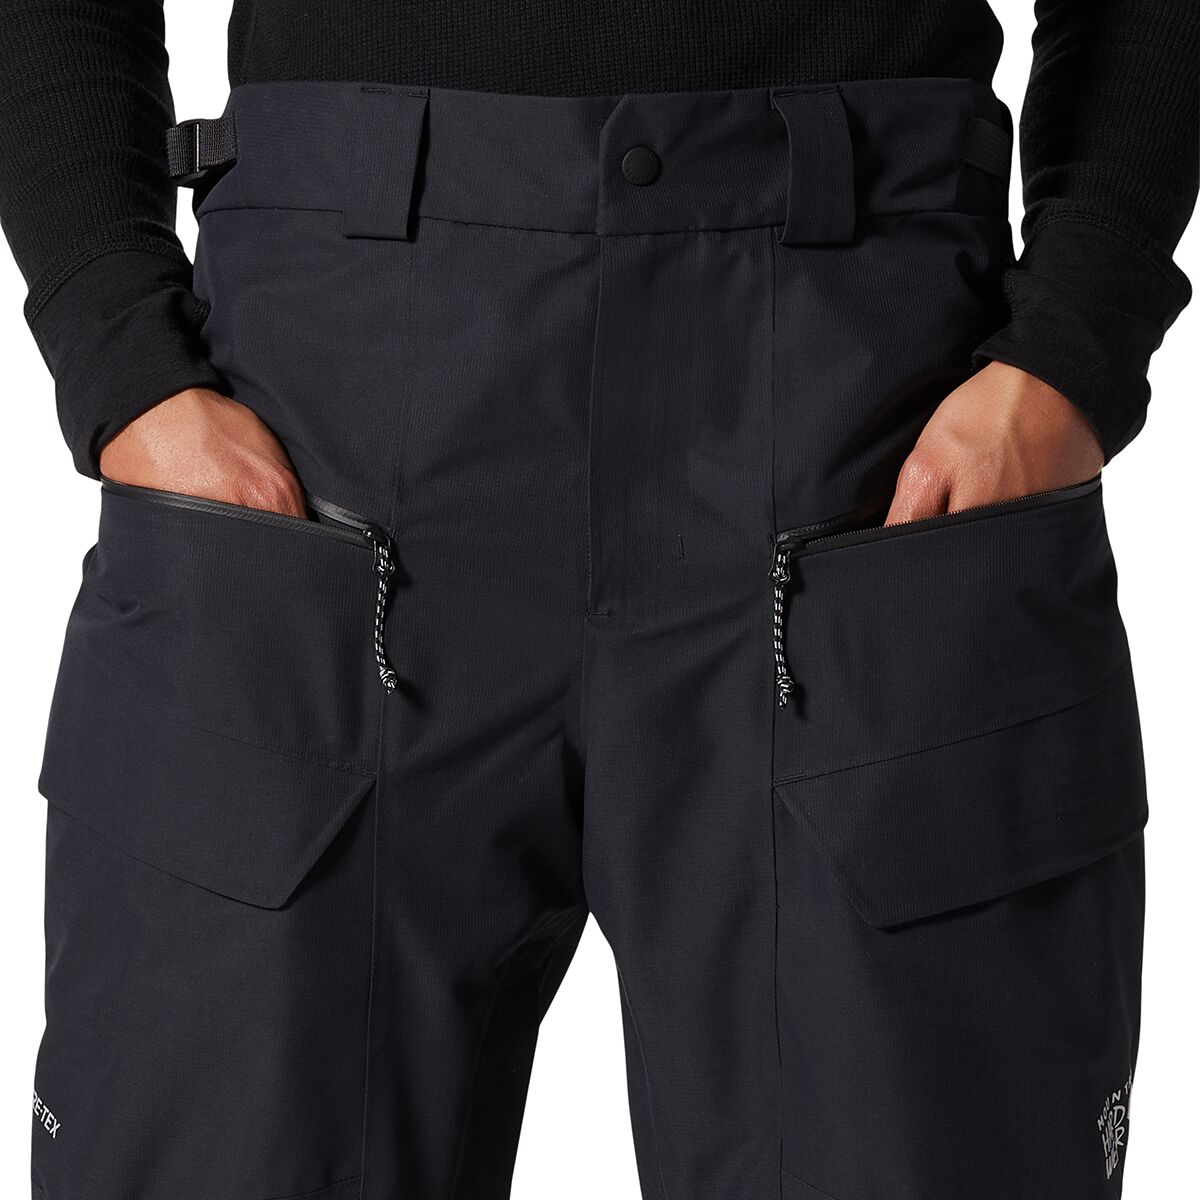 Mountain Hardwear Cloud Bank GORE-TEX Insulated Pant - Men's ...